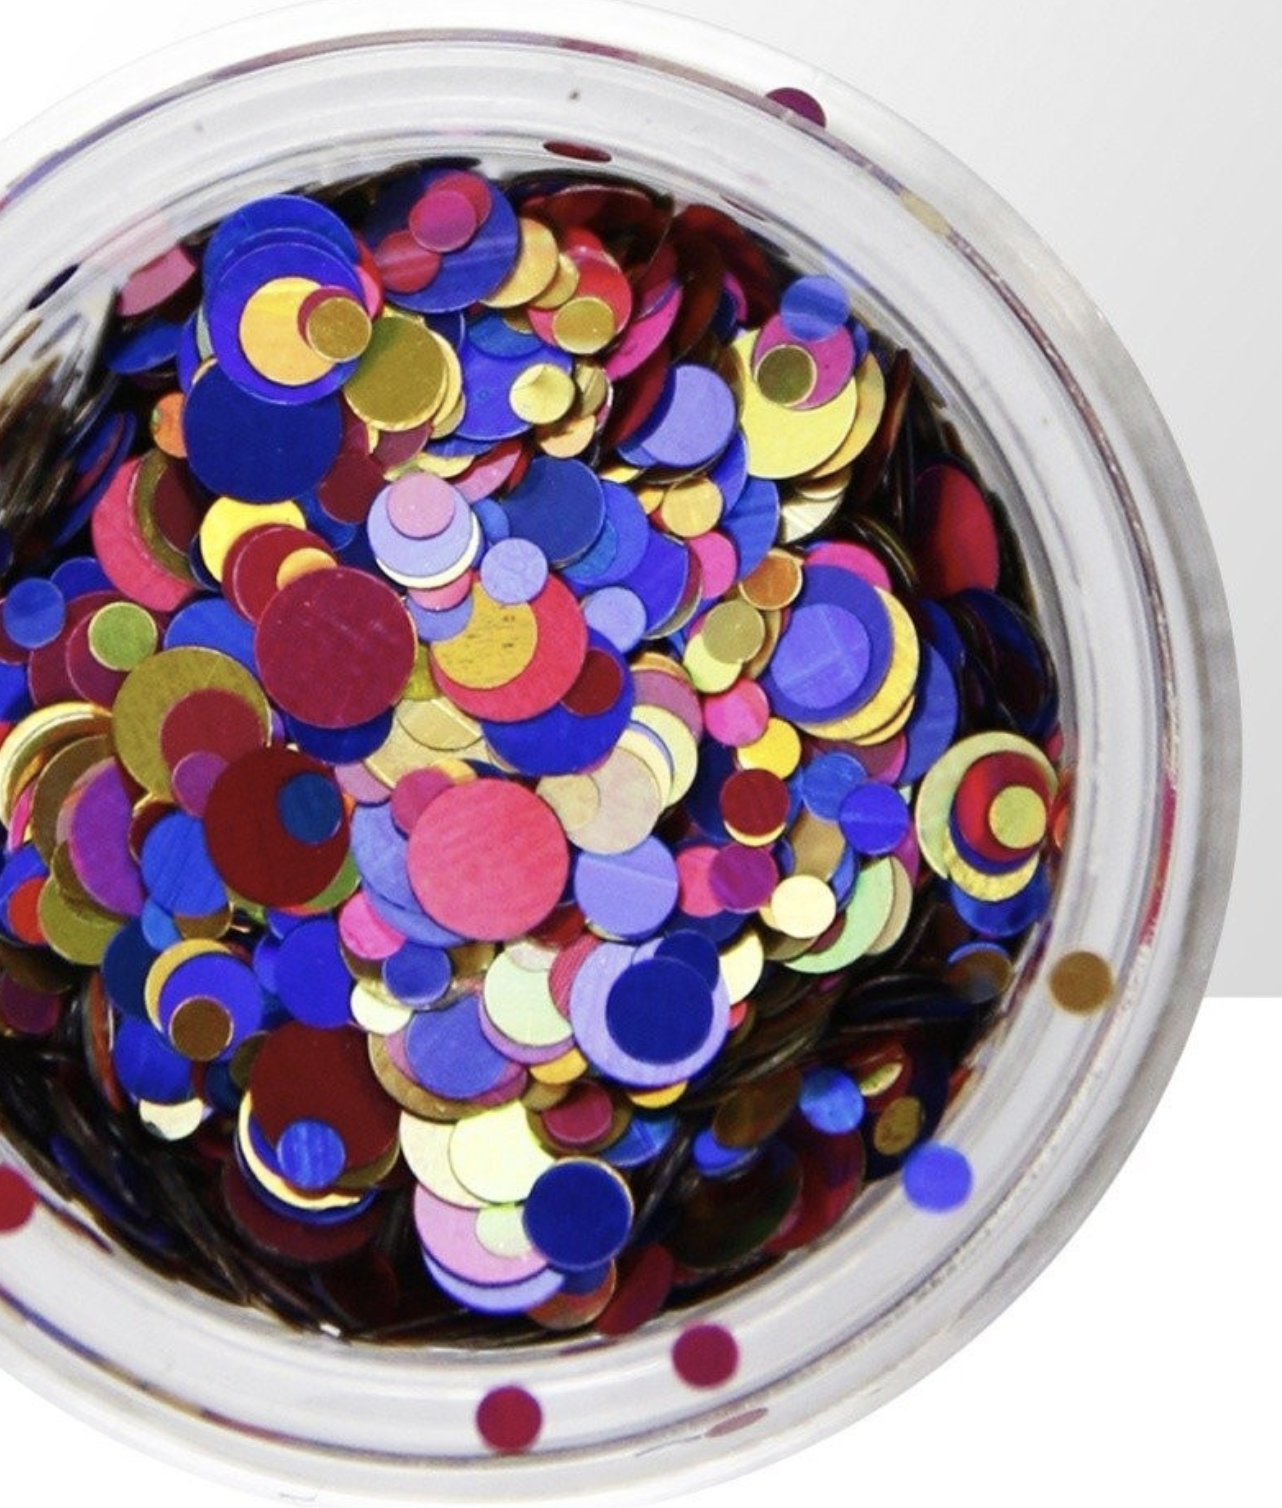 Senator worst Ontspannend Confetti Mix Qnails - Q Nails - groothandel in nagelproducten